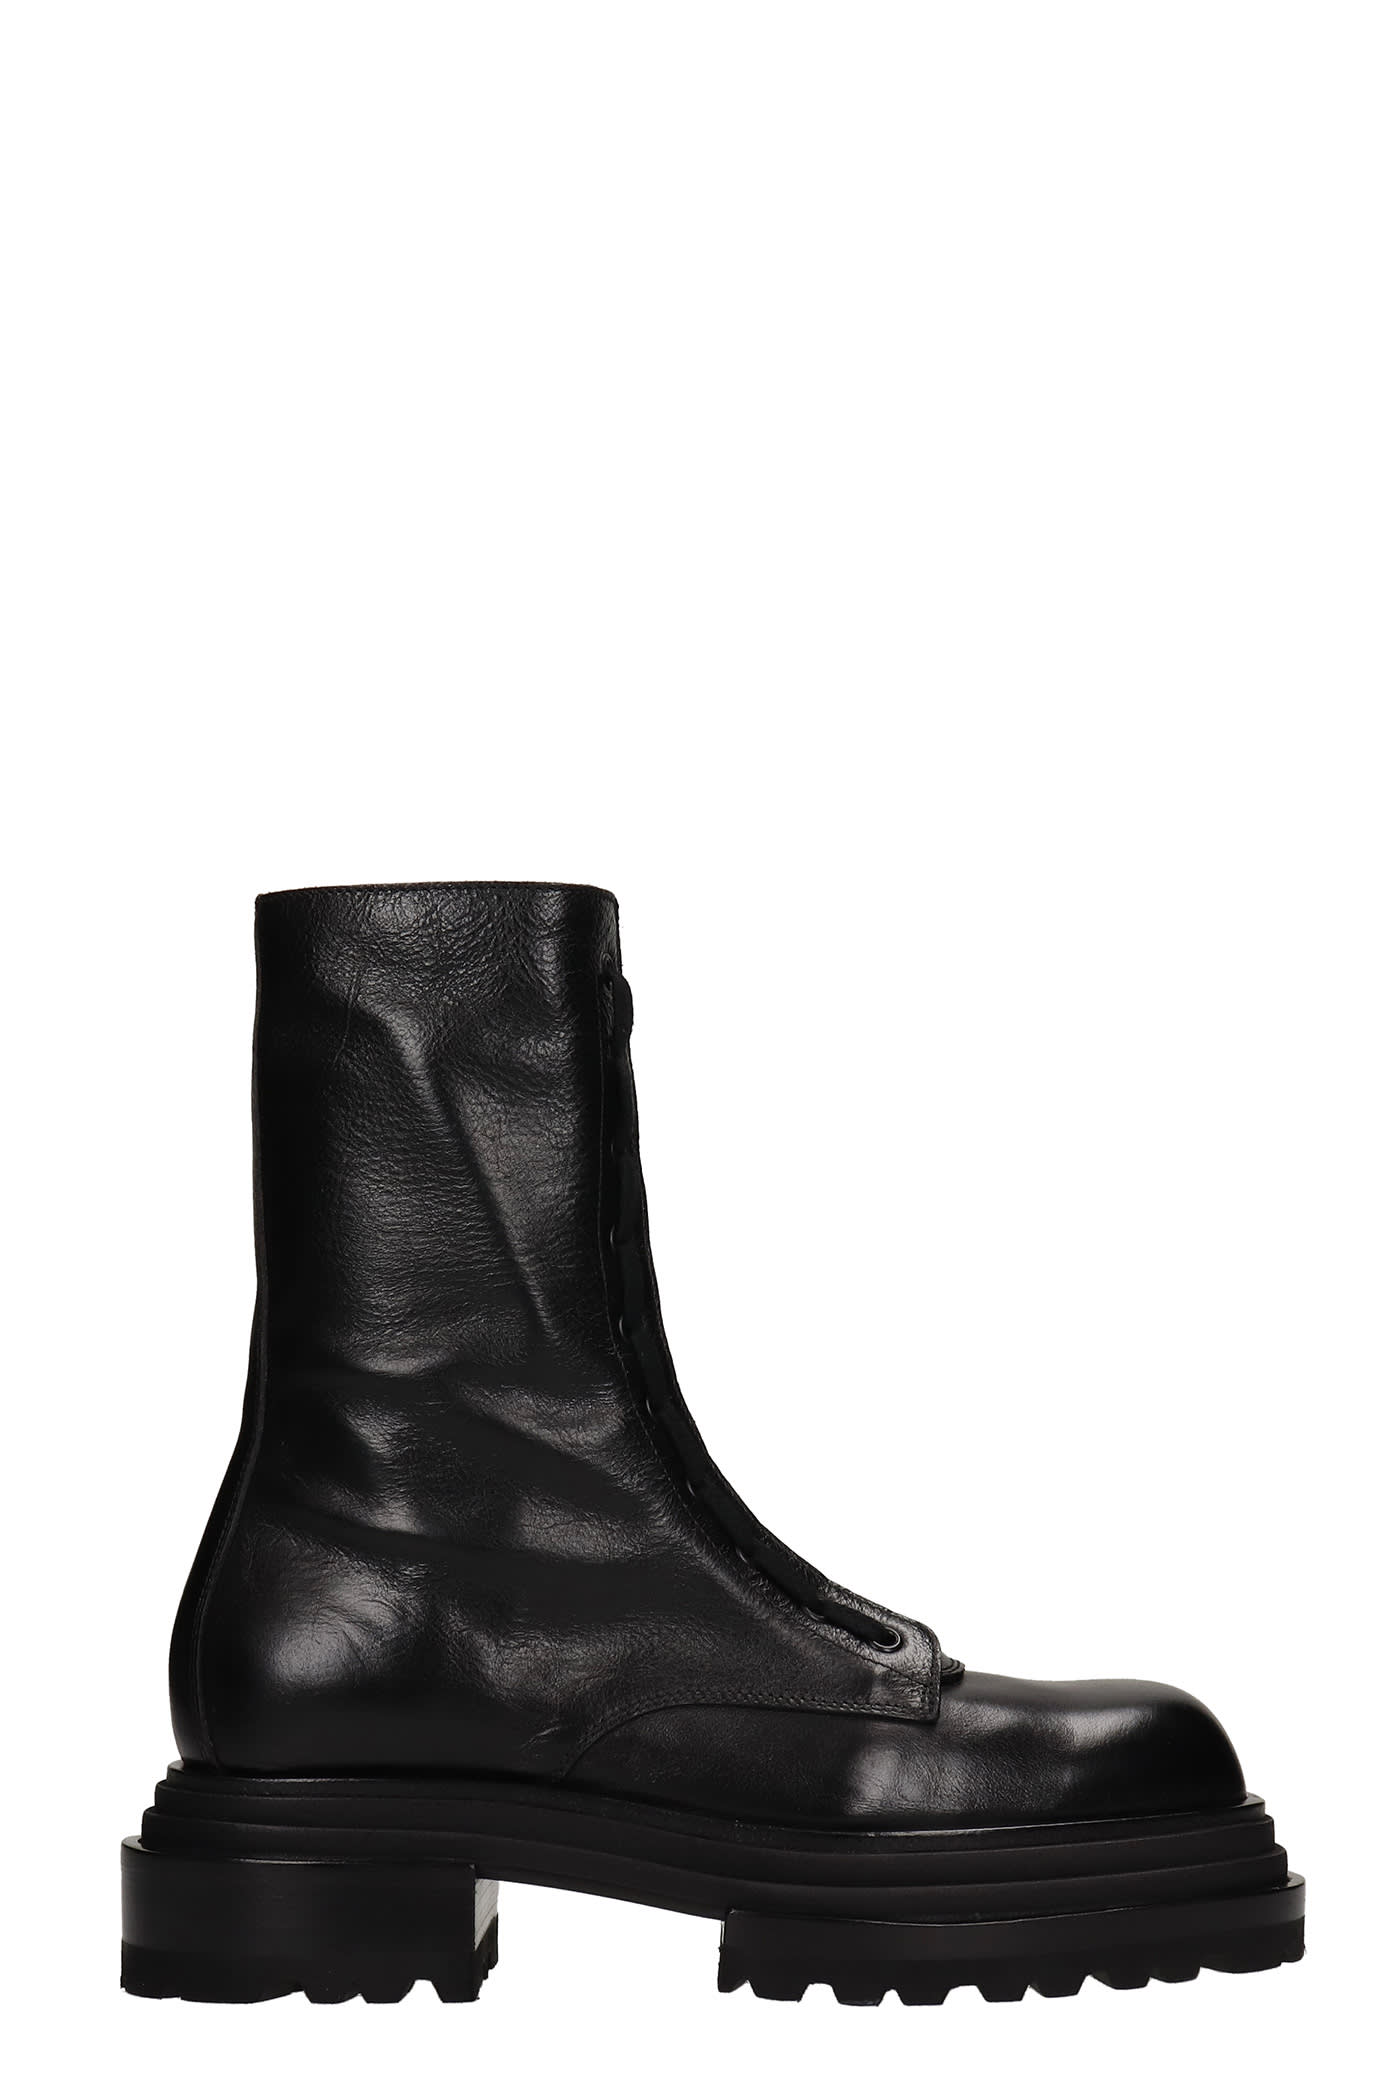 Cesare Paciotti Combat Boots In Black Leather